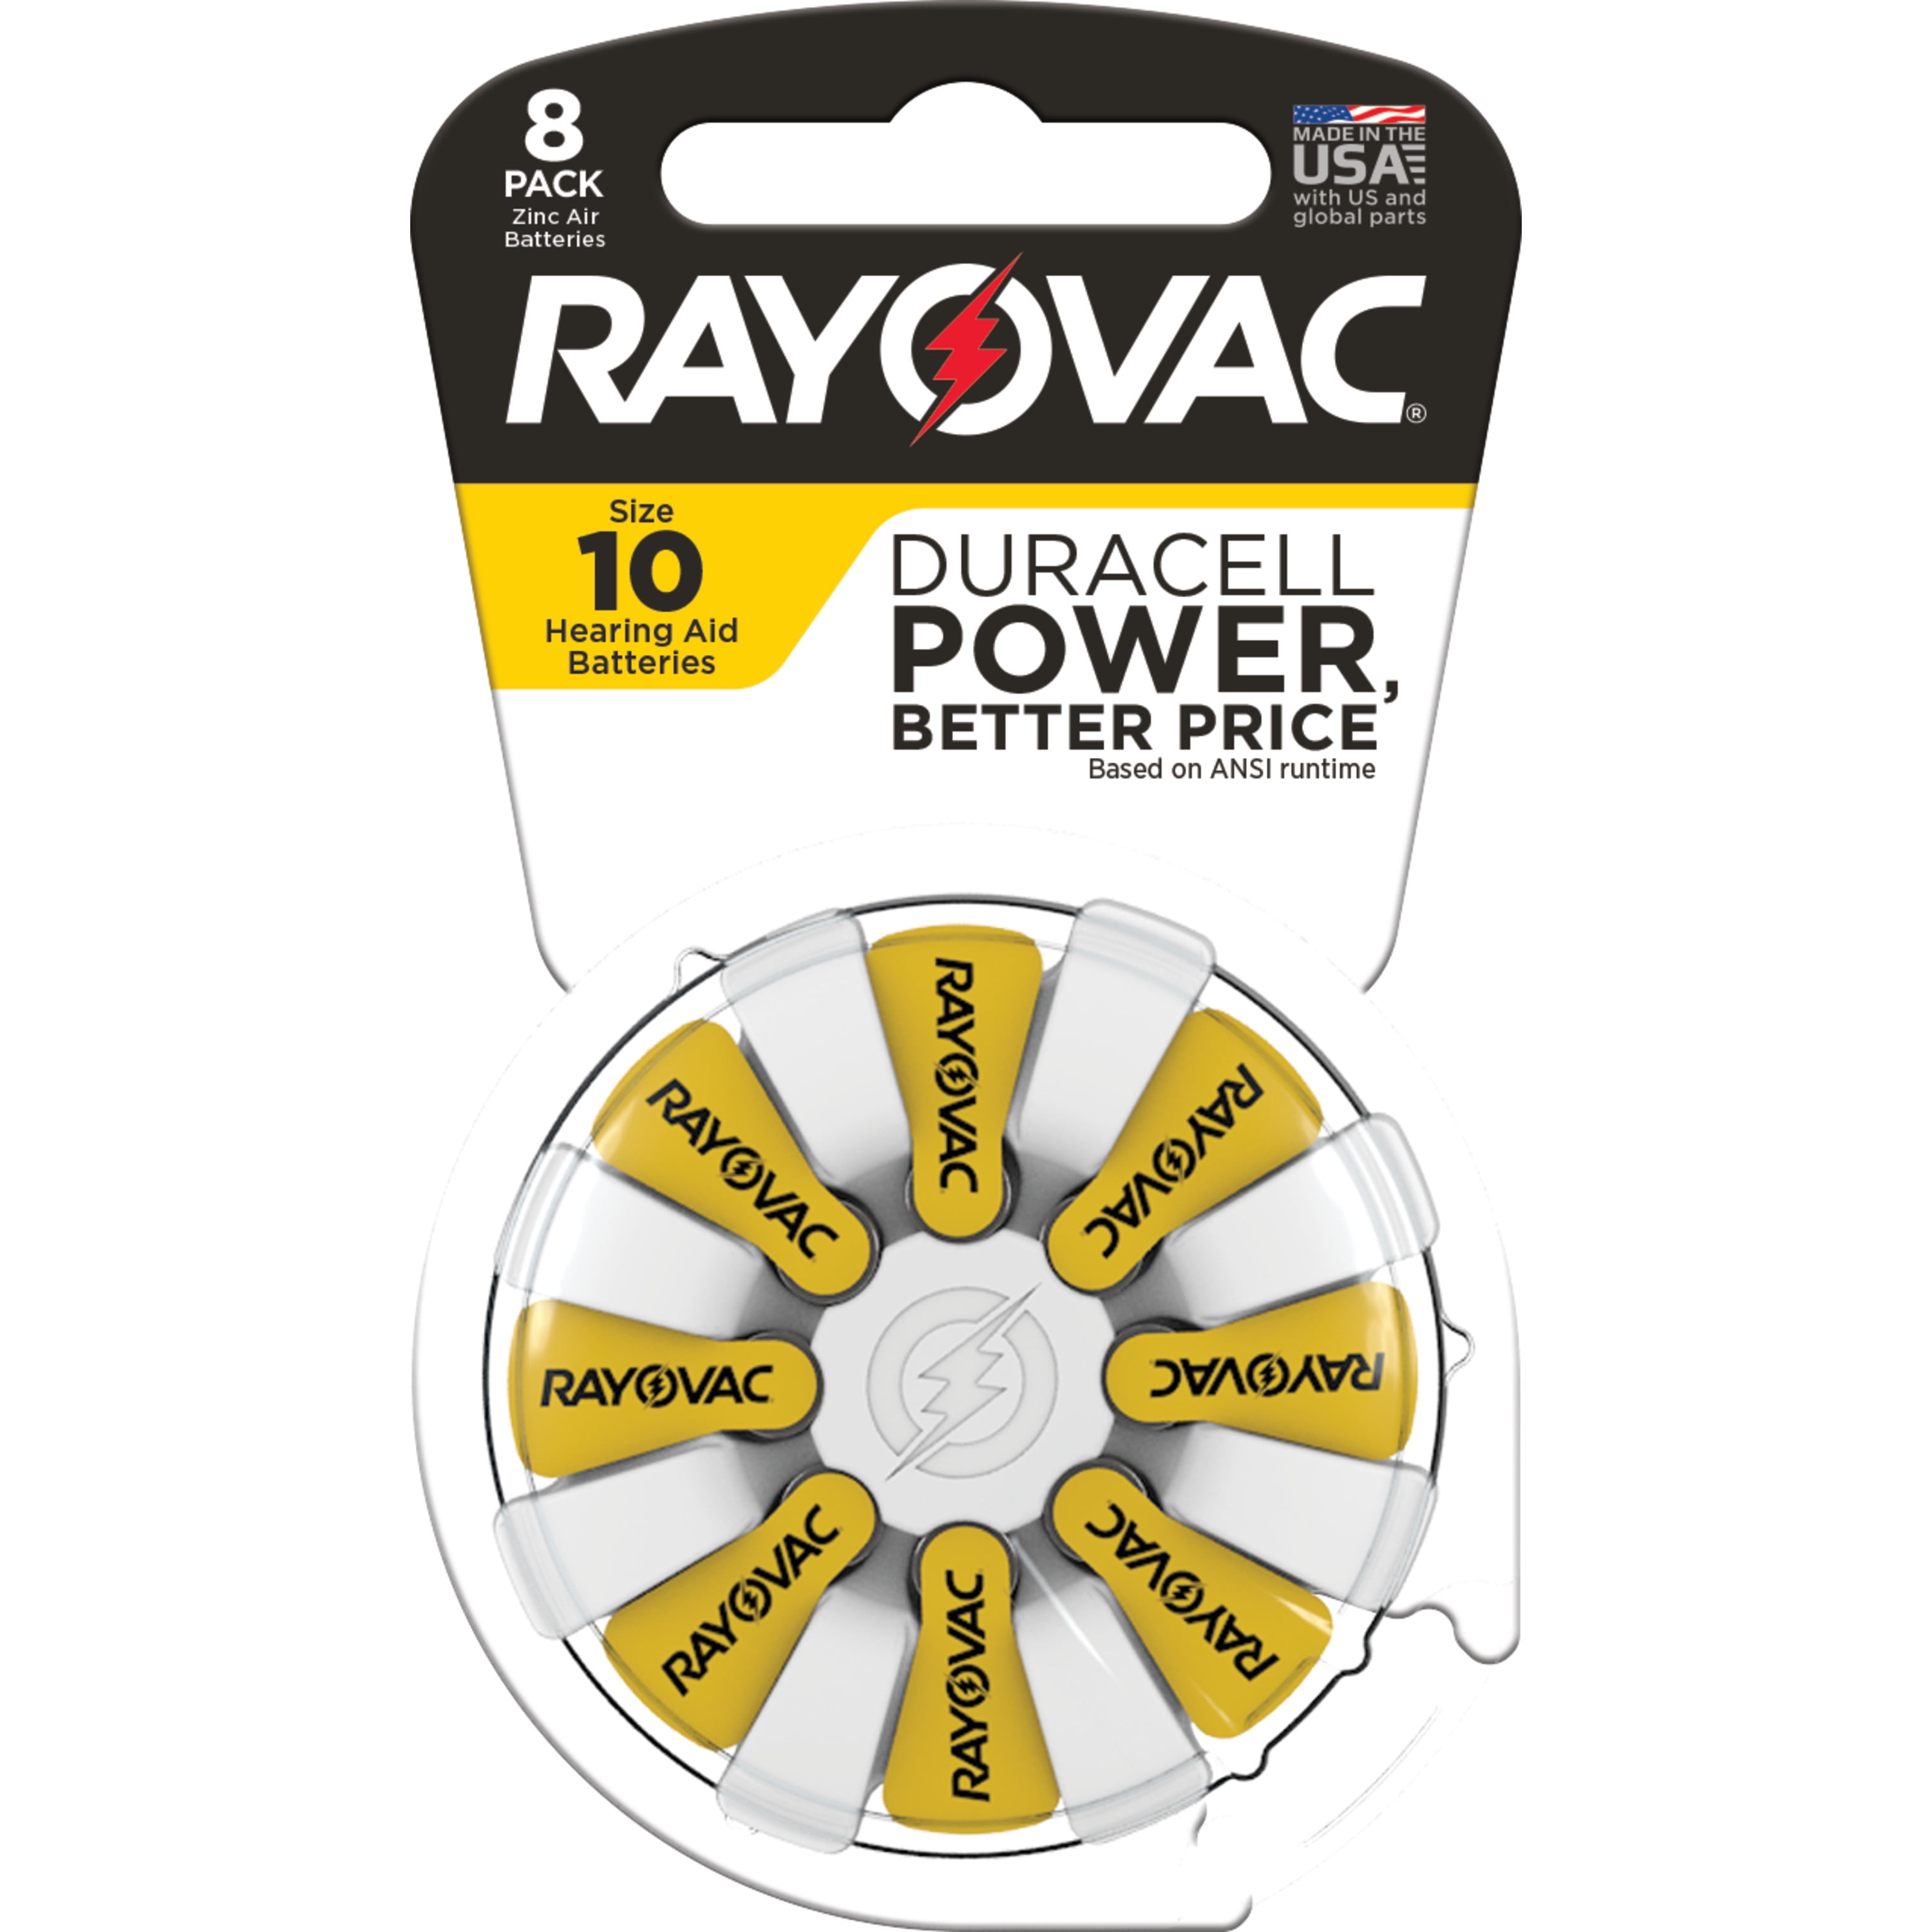 Rayovac 3537123 1.45V Zinc-Air 10 Hearing Aid Battery, 8 per Pack